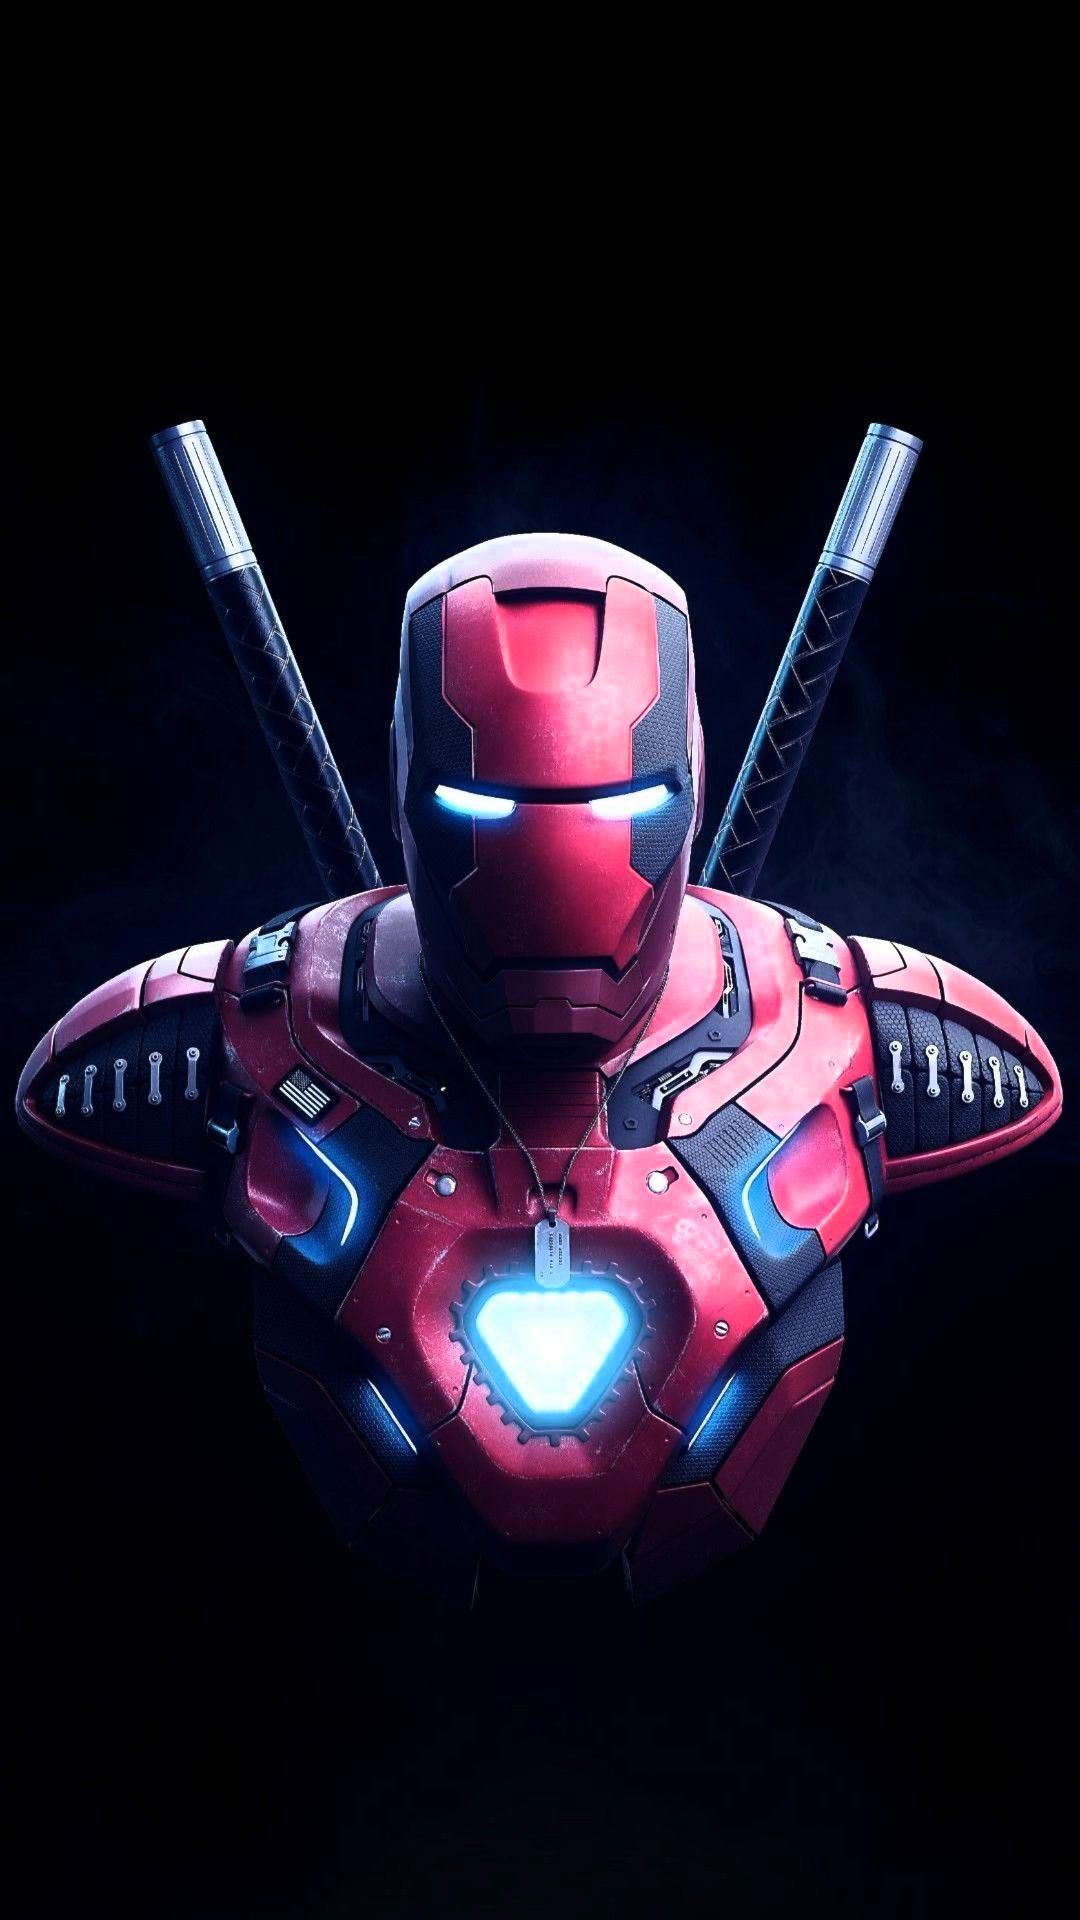 Hybrid deadpool Iron man. Deadpool wallpaper, Superhero wallpaper, Marvel comics wallpaper